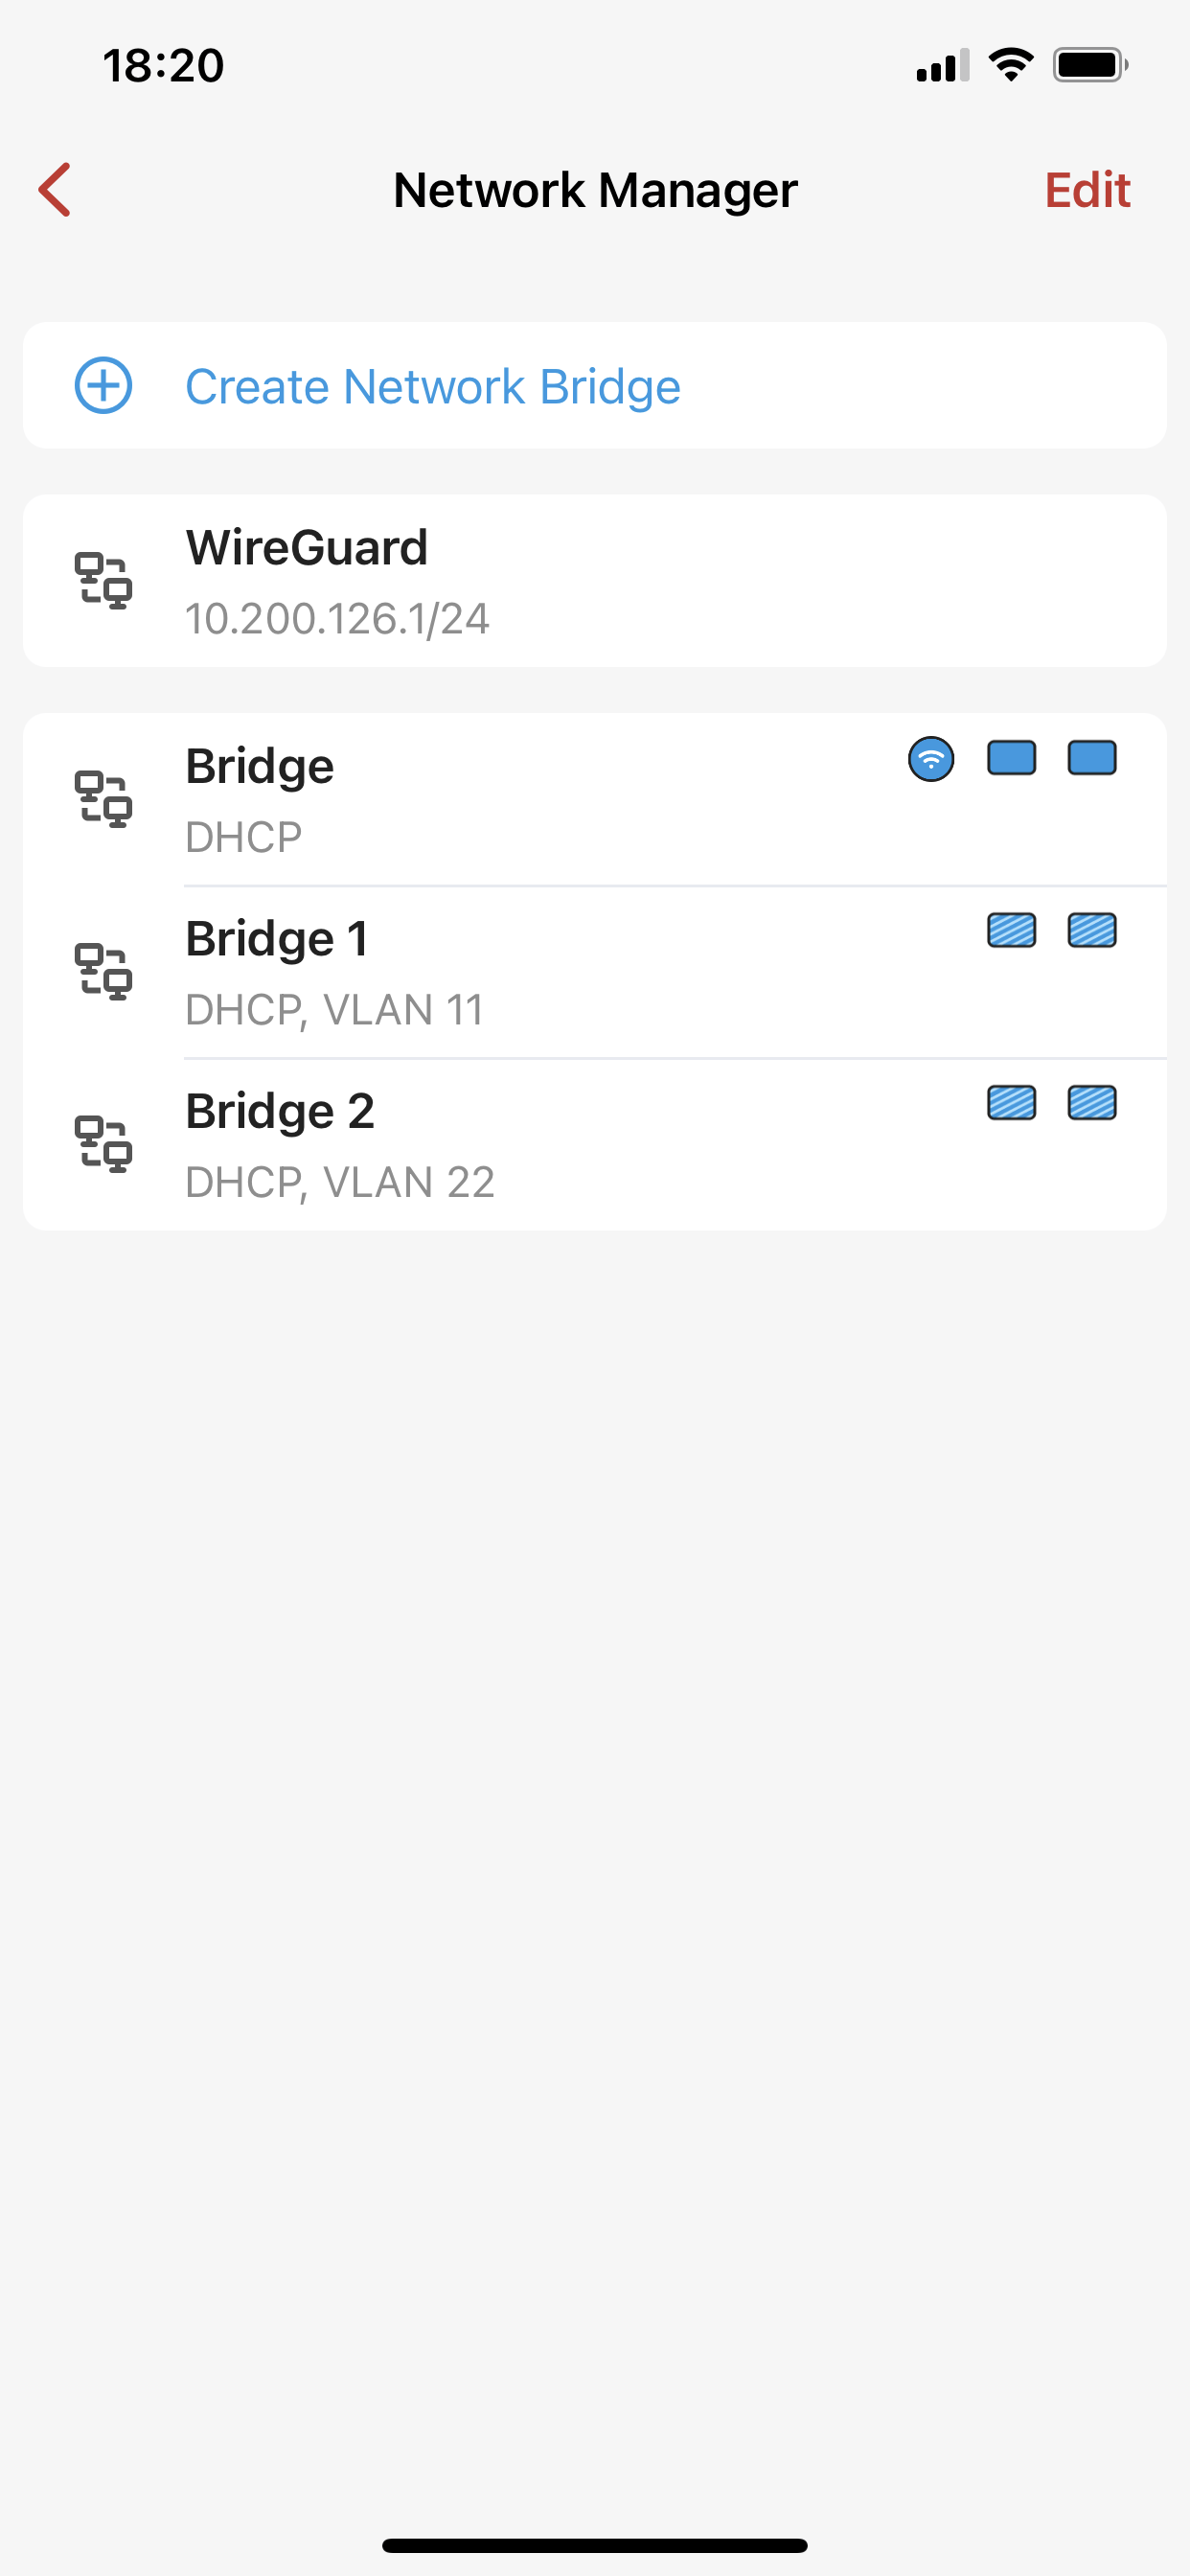 Firewalla network manager will display all configured bridges